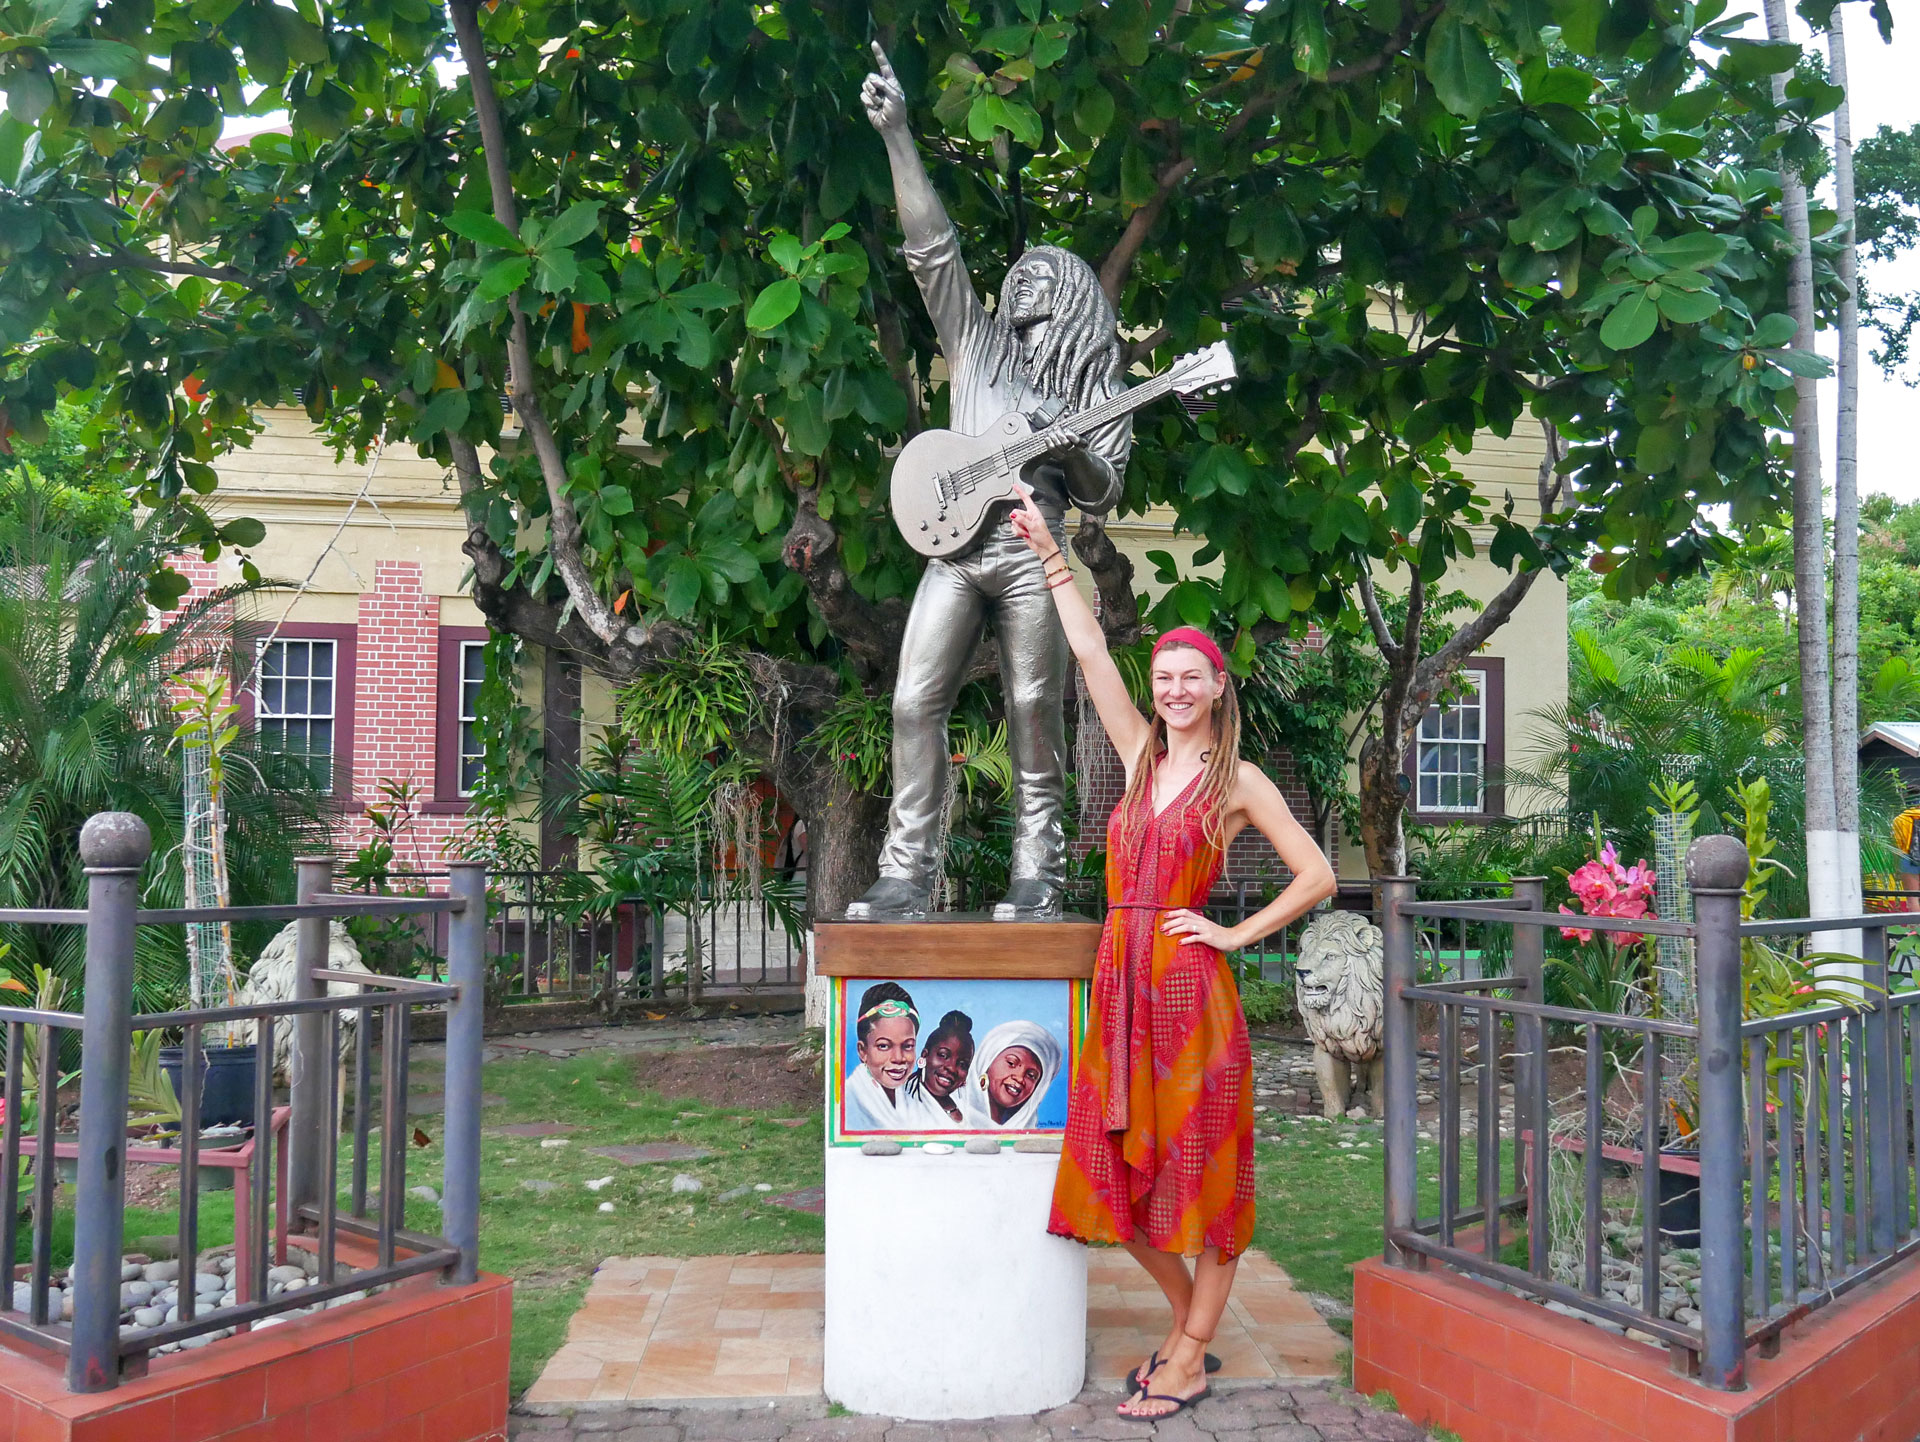 Rasta girl and Bob Marley statue at museum in Kingston, Jamaica